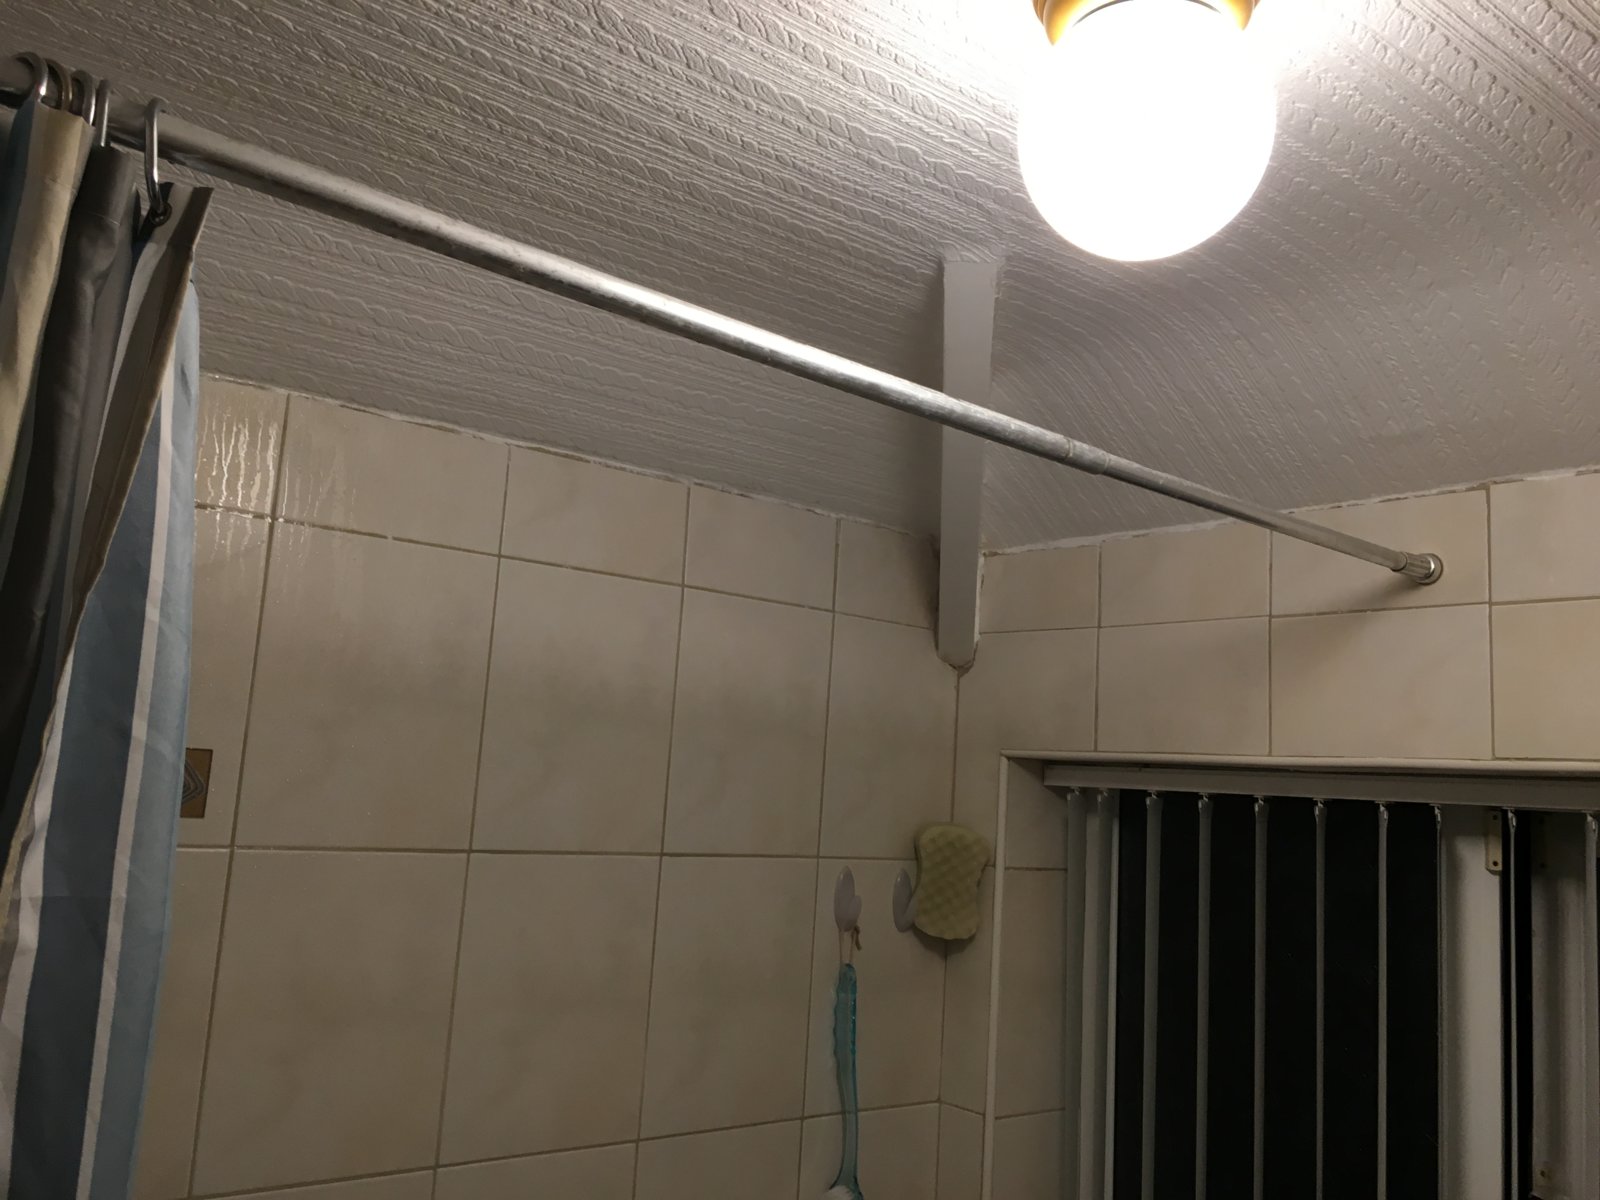 Boarding bathroom ceiling .... curved? | DIYnot Forums